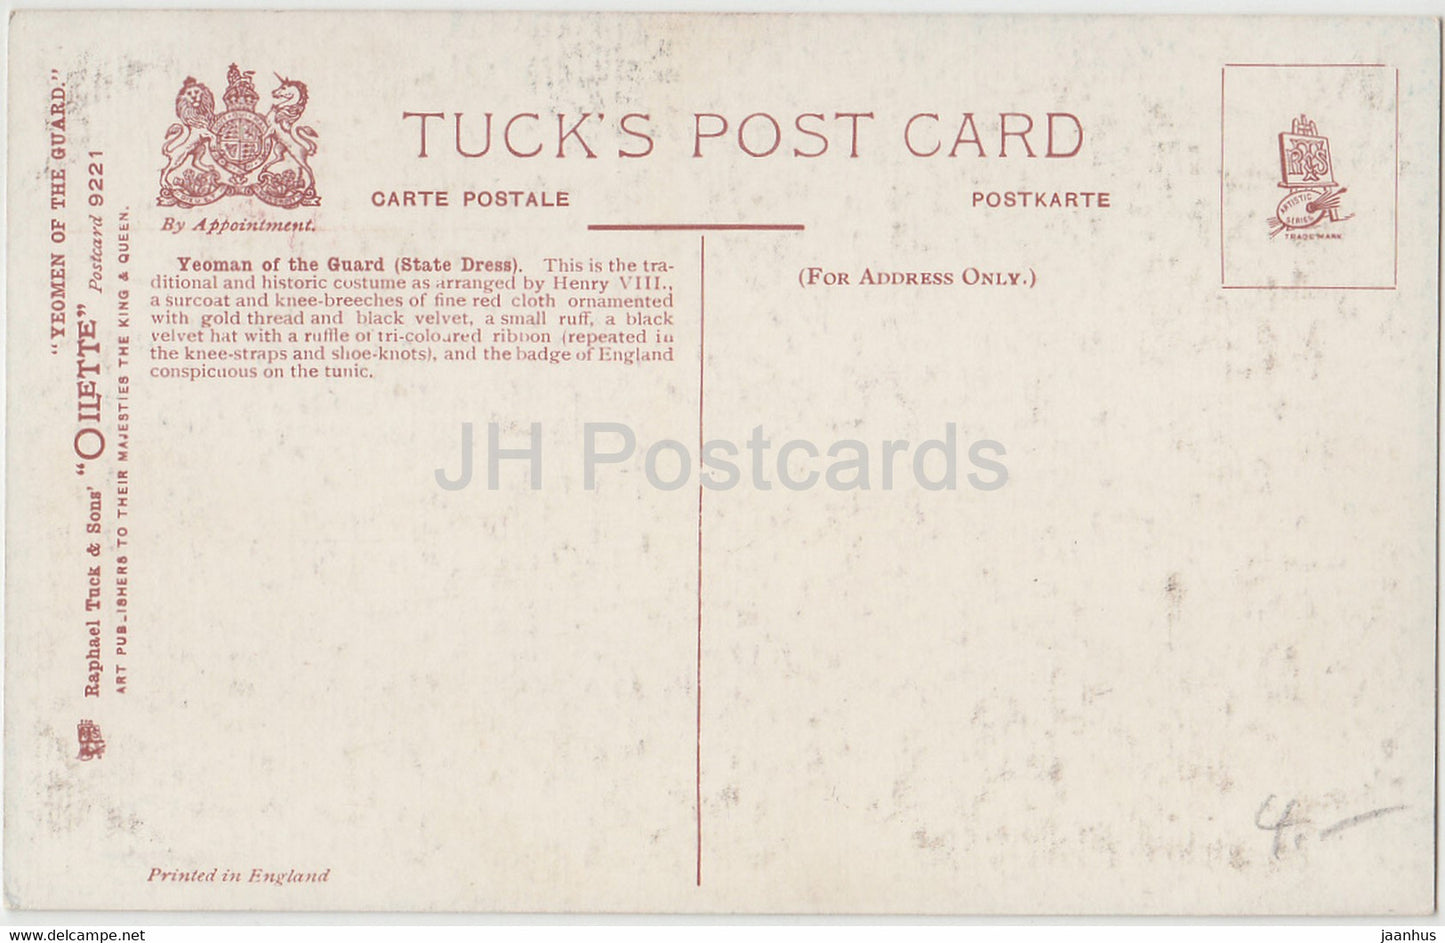 A Yeoman of the Guard - State Dress - carte postale ancienne - Angleterre - Royaume-Uni - inutilisé